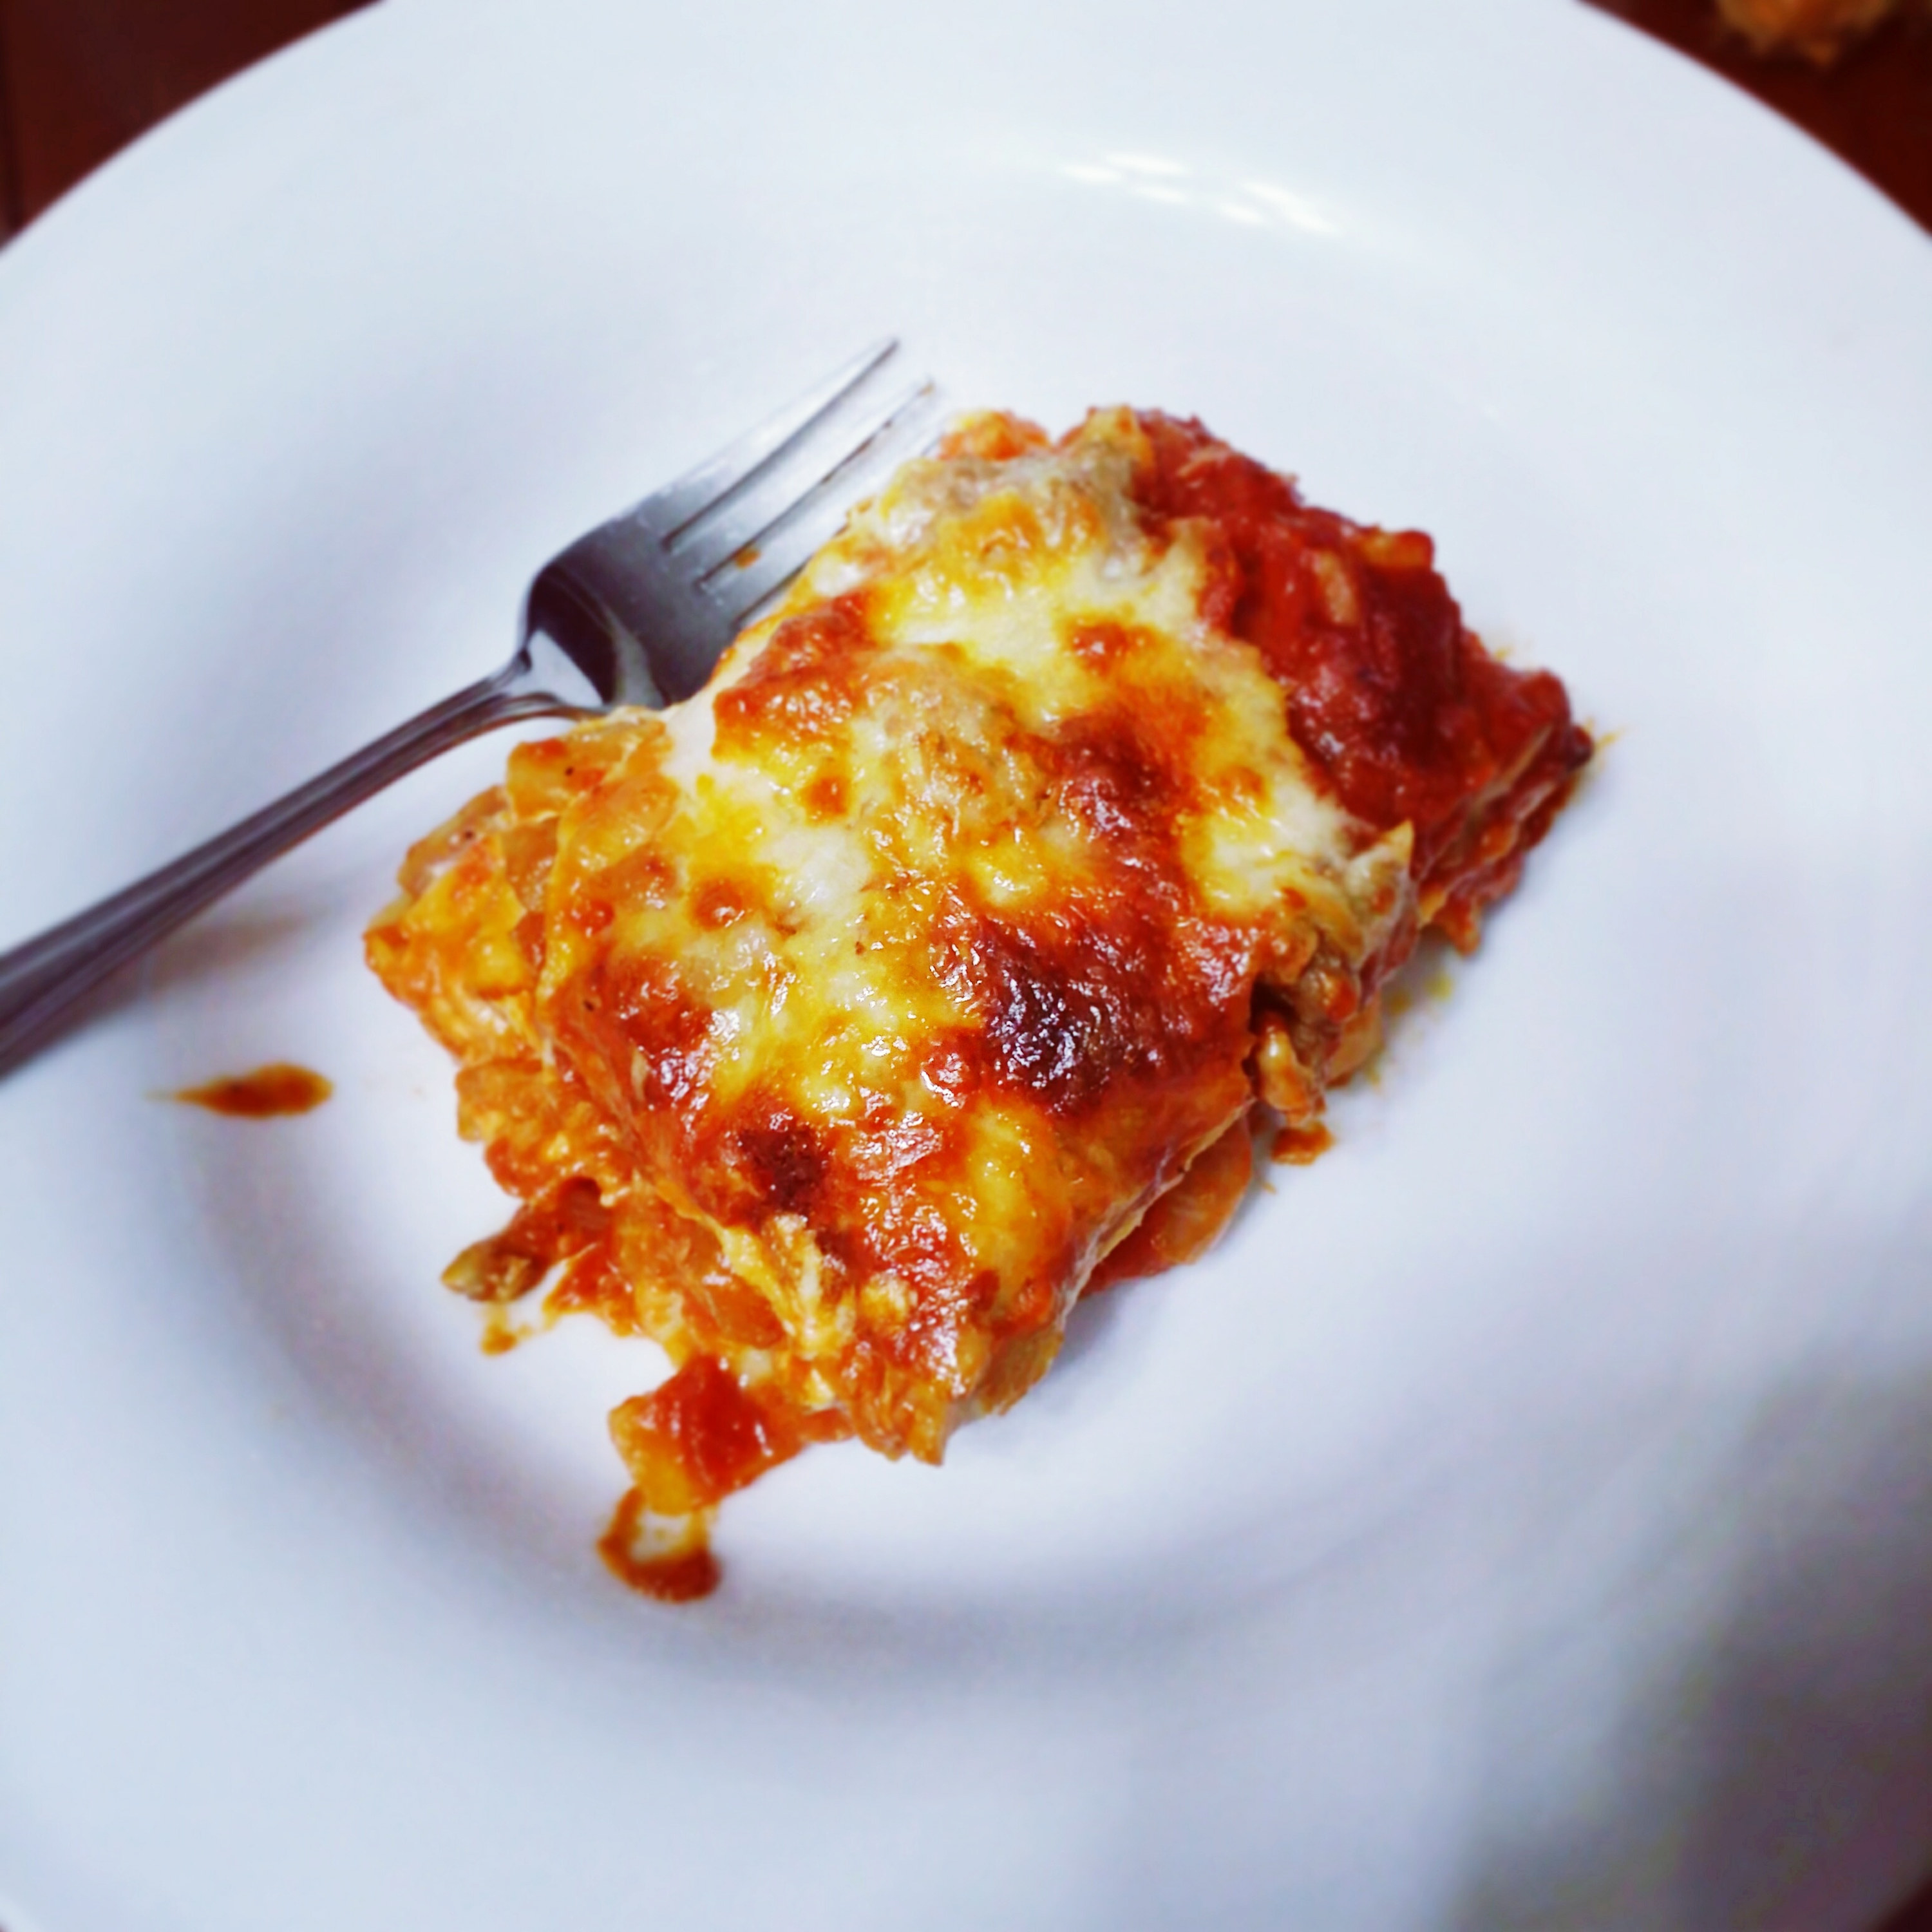 A crispy slice of lasagna on a plate.